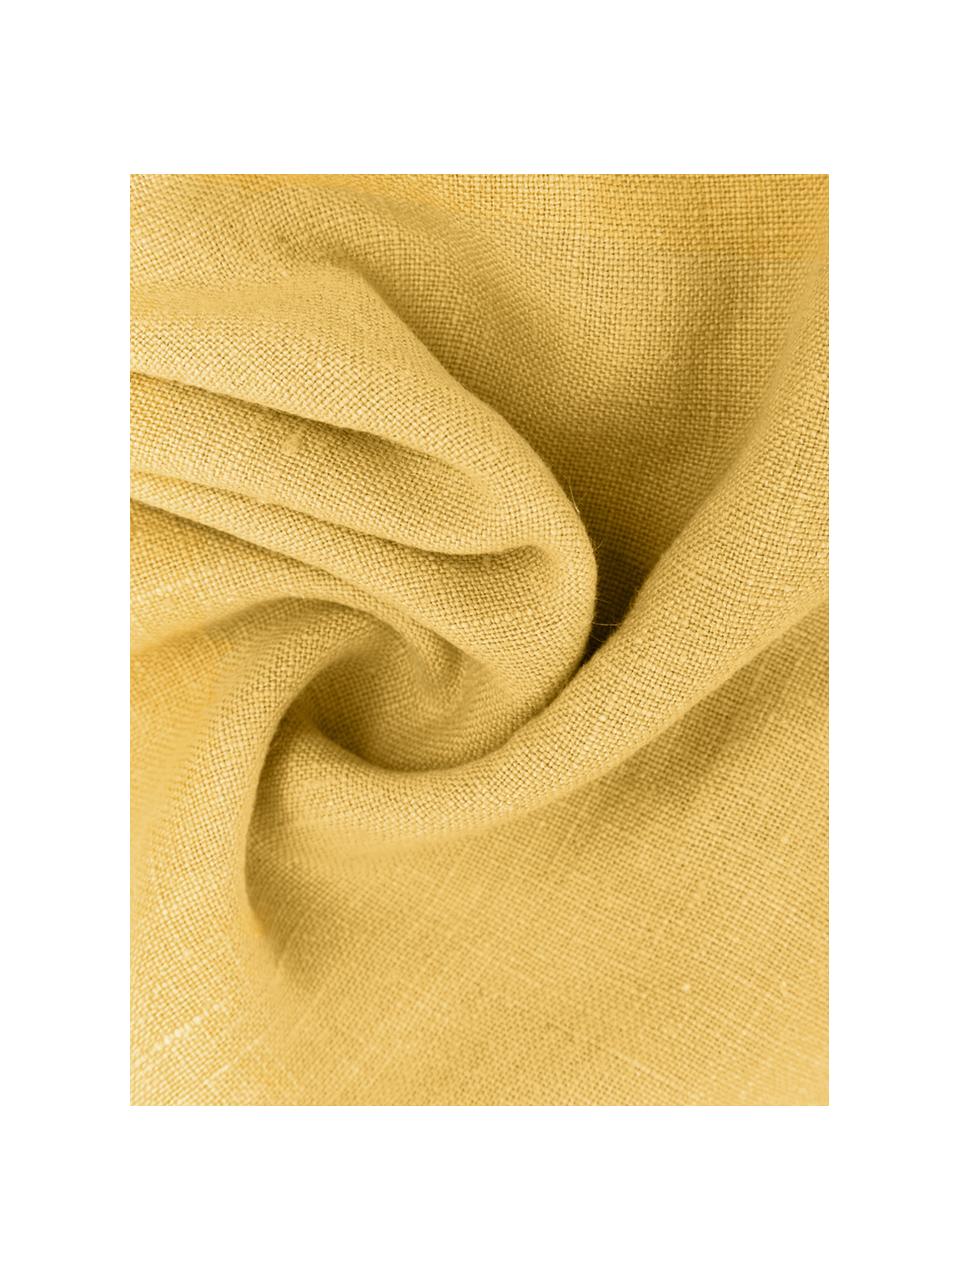 Leinen-Kissenhülle Lanya in Gelb, 100% Leinen, Gelb, B 40 x L 40 cm